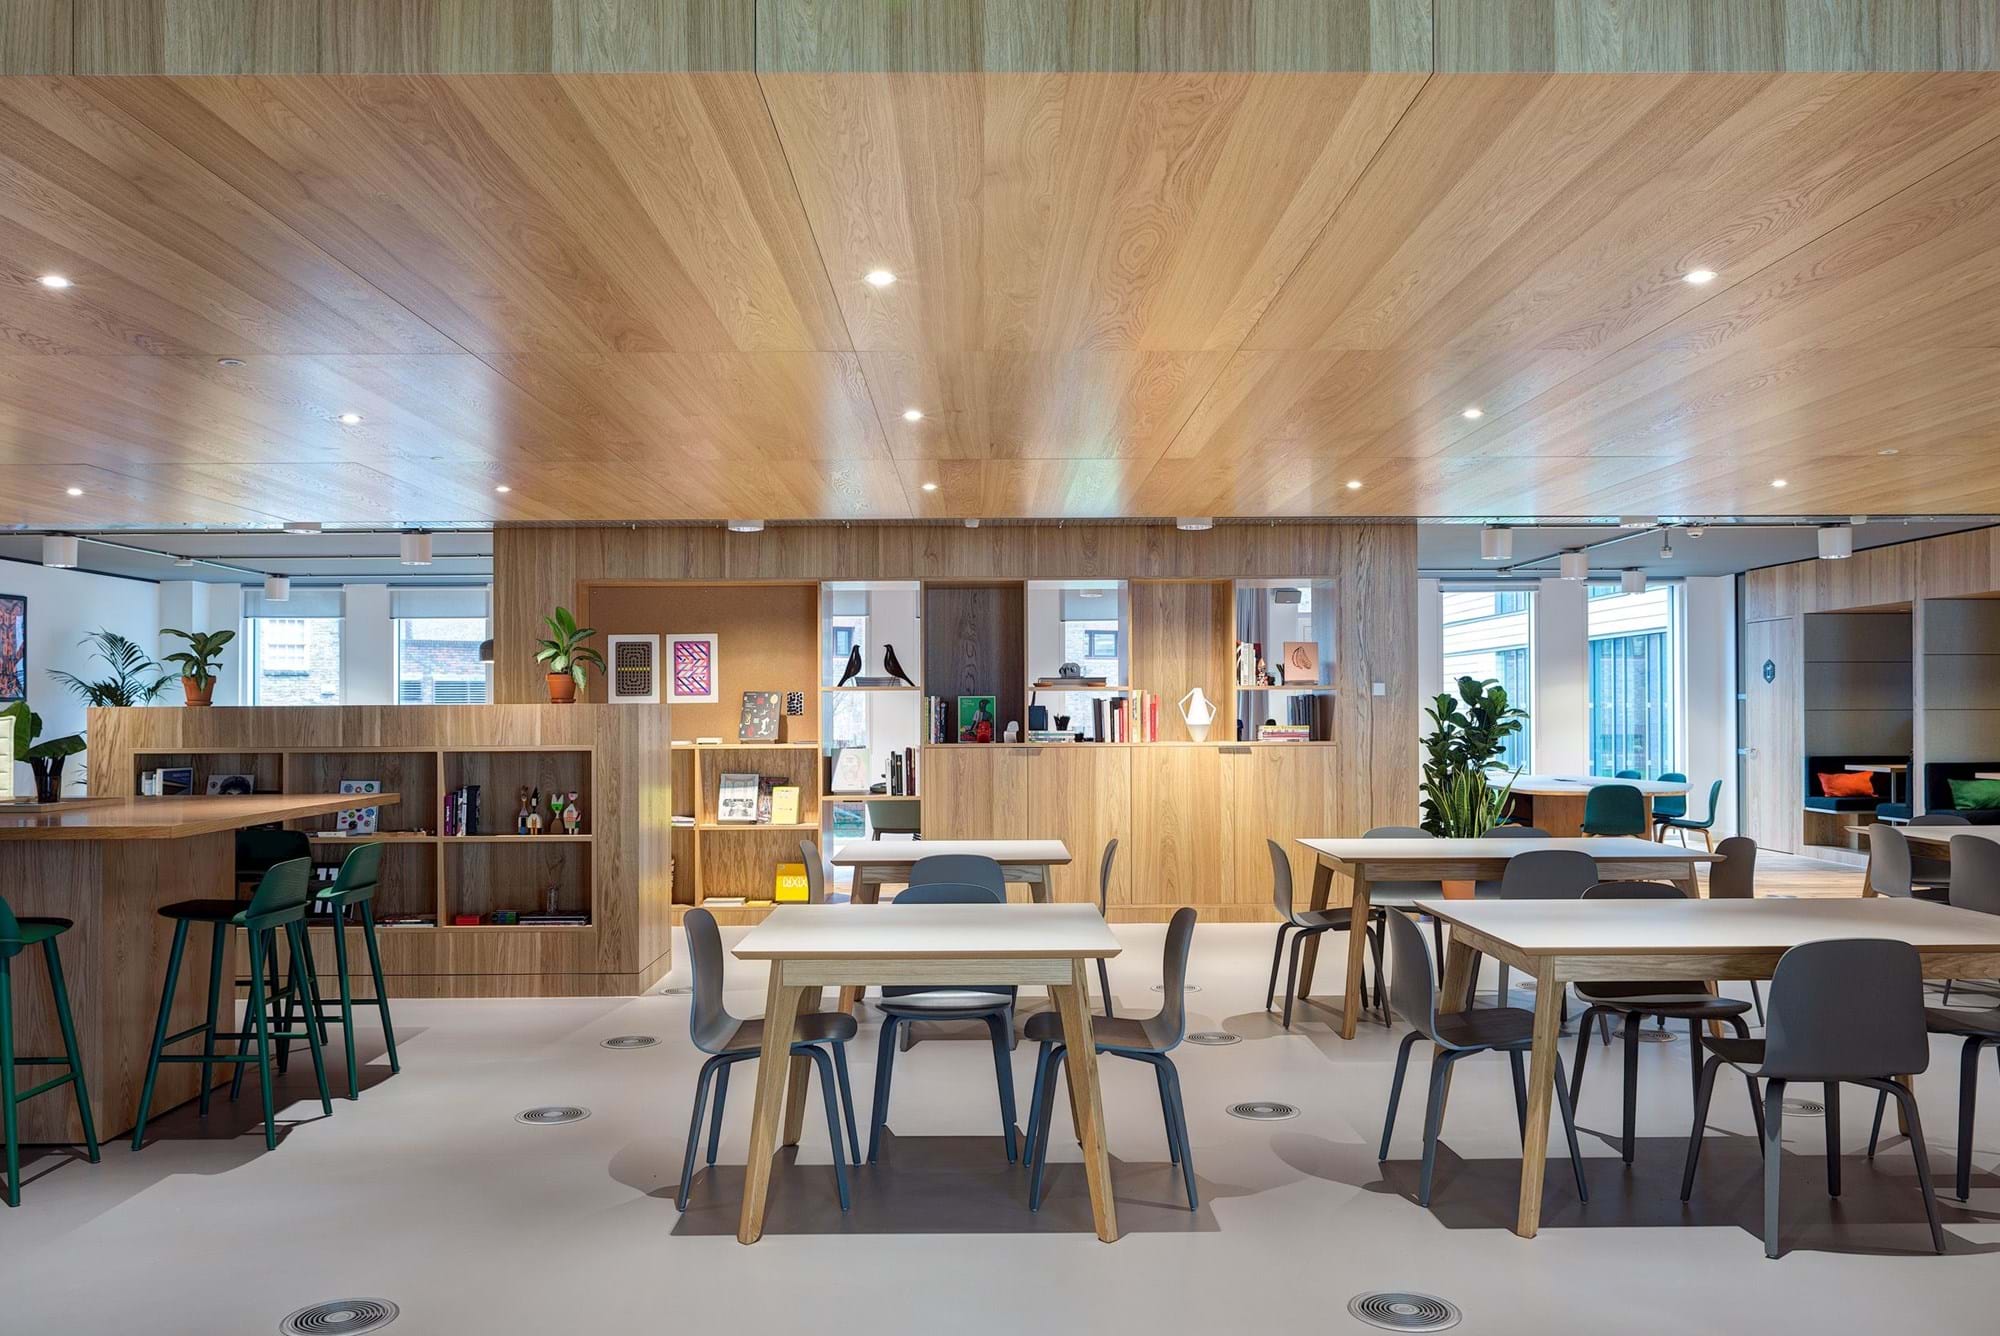 Modus Workspace office design, fit out and refurbishment - Spaces - Uxbridge - Spaces Uxbridge 05 highres sRGB.jpg